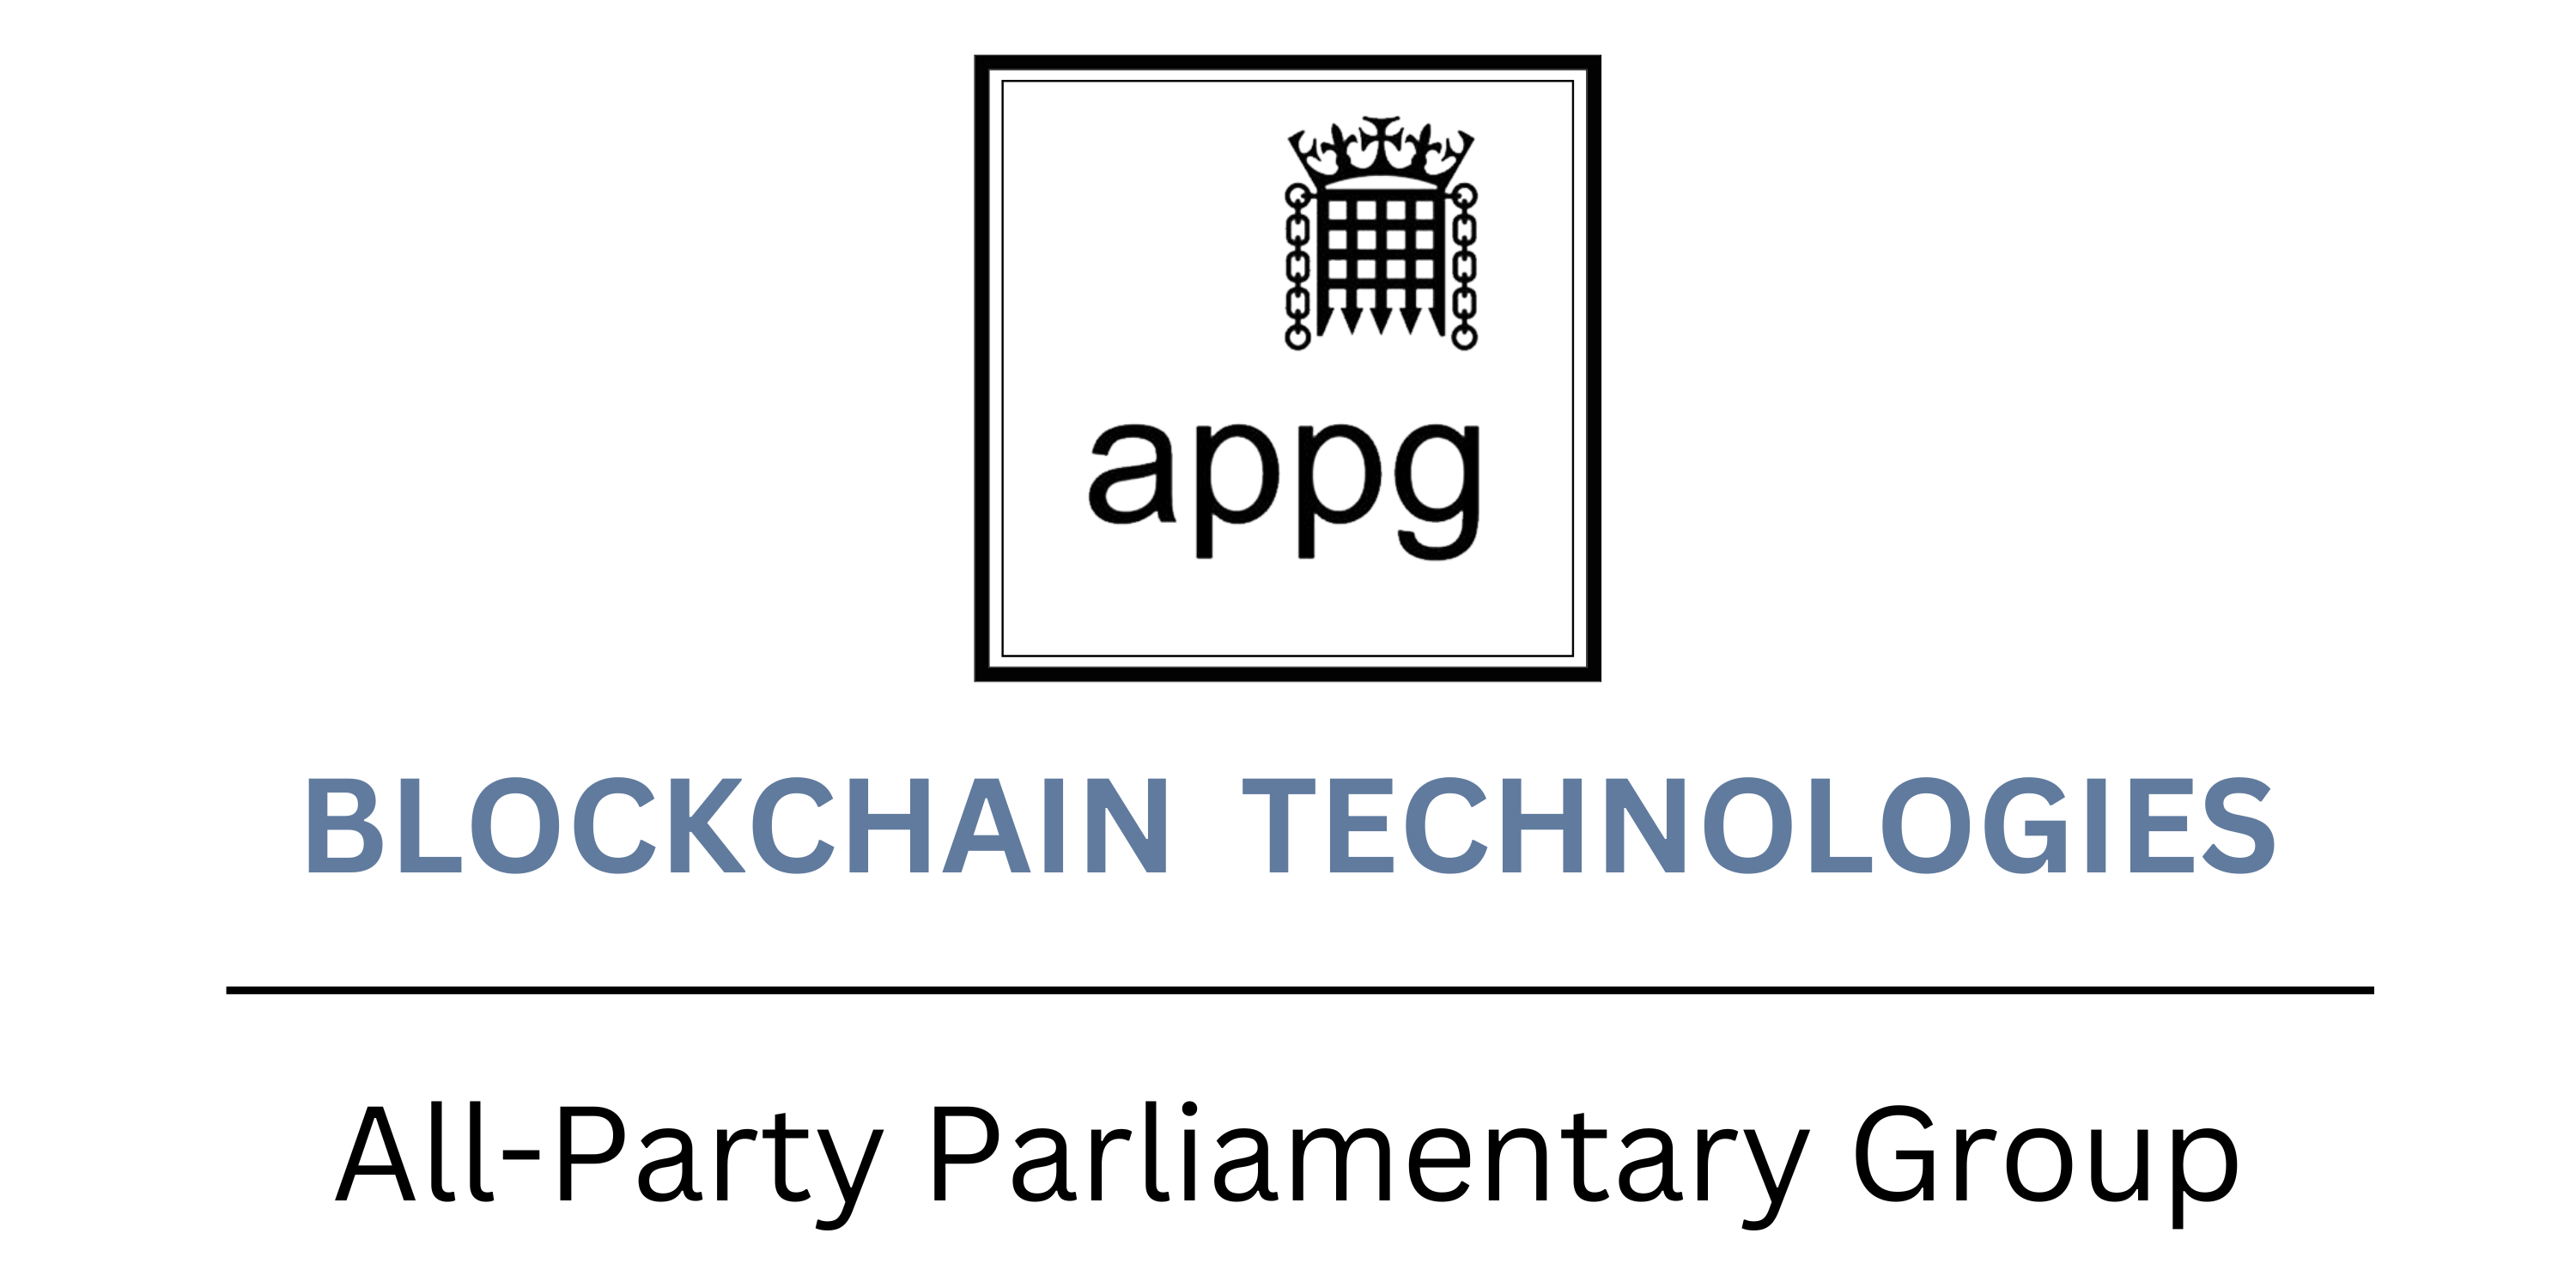 APG for Blockchain Technologies